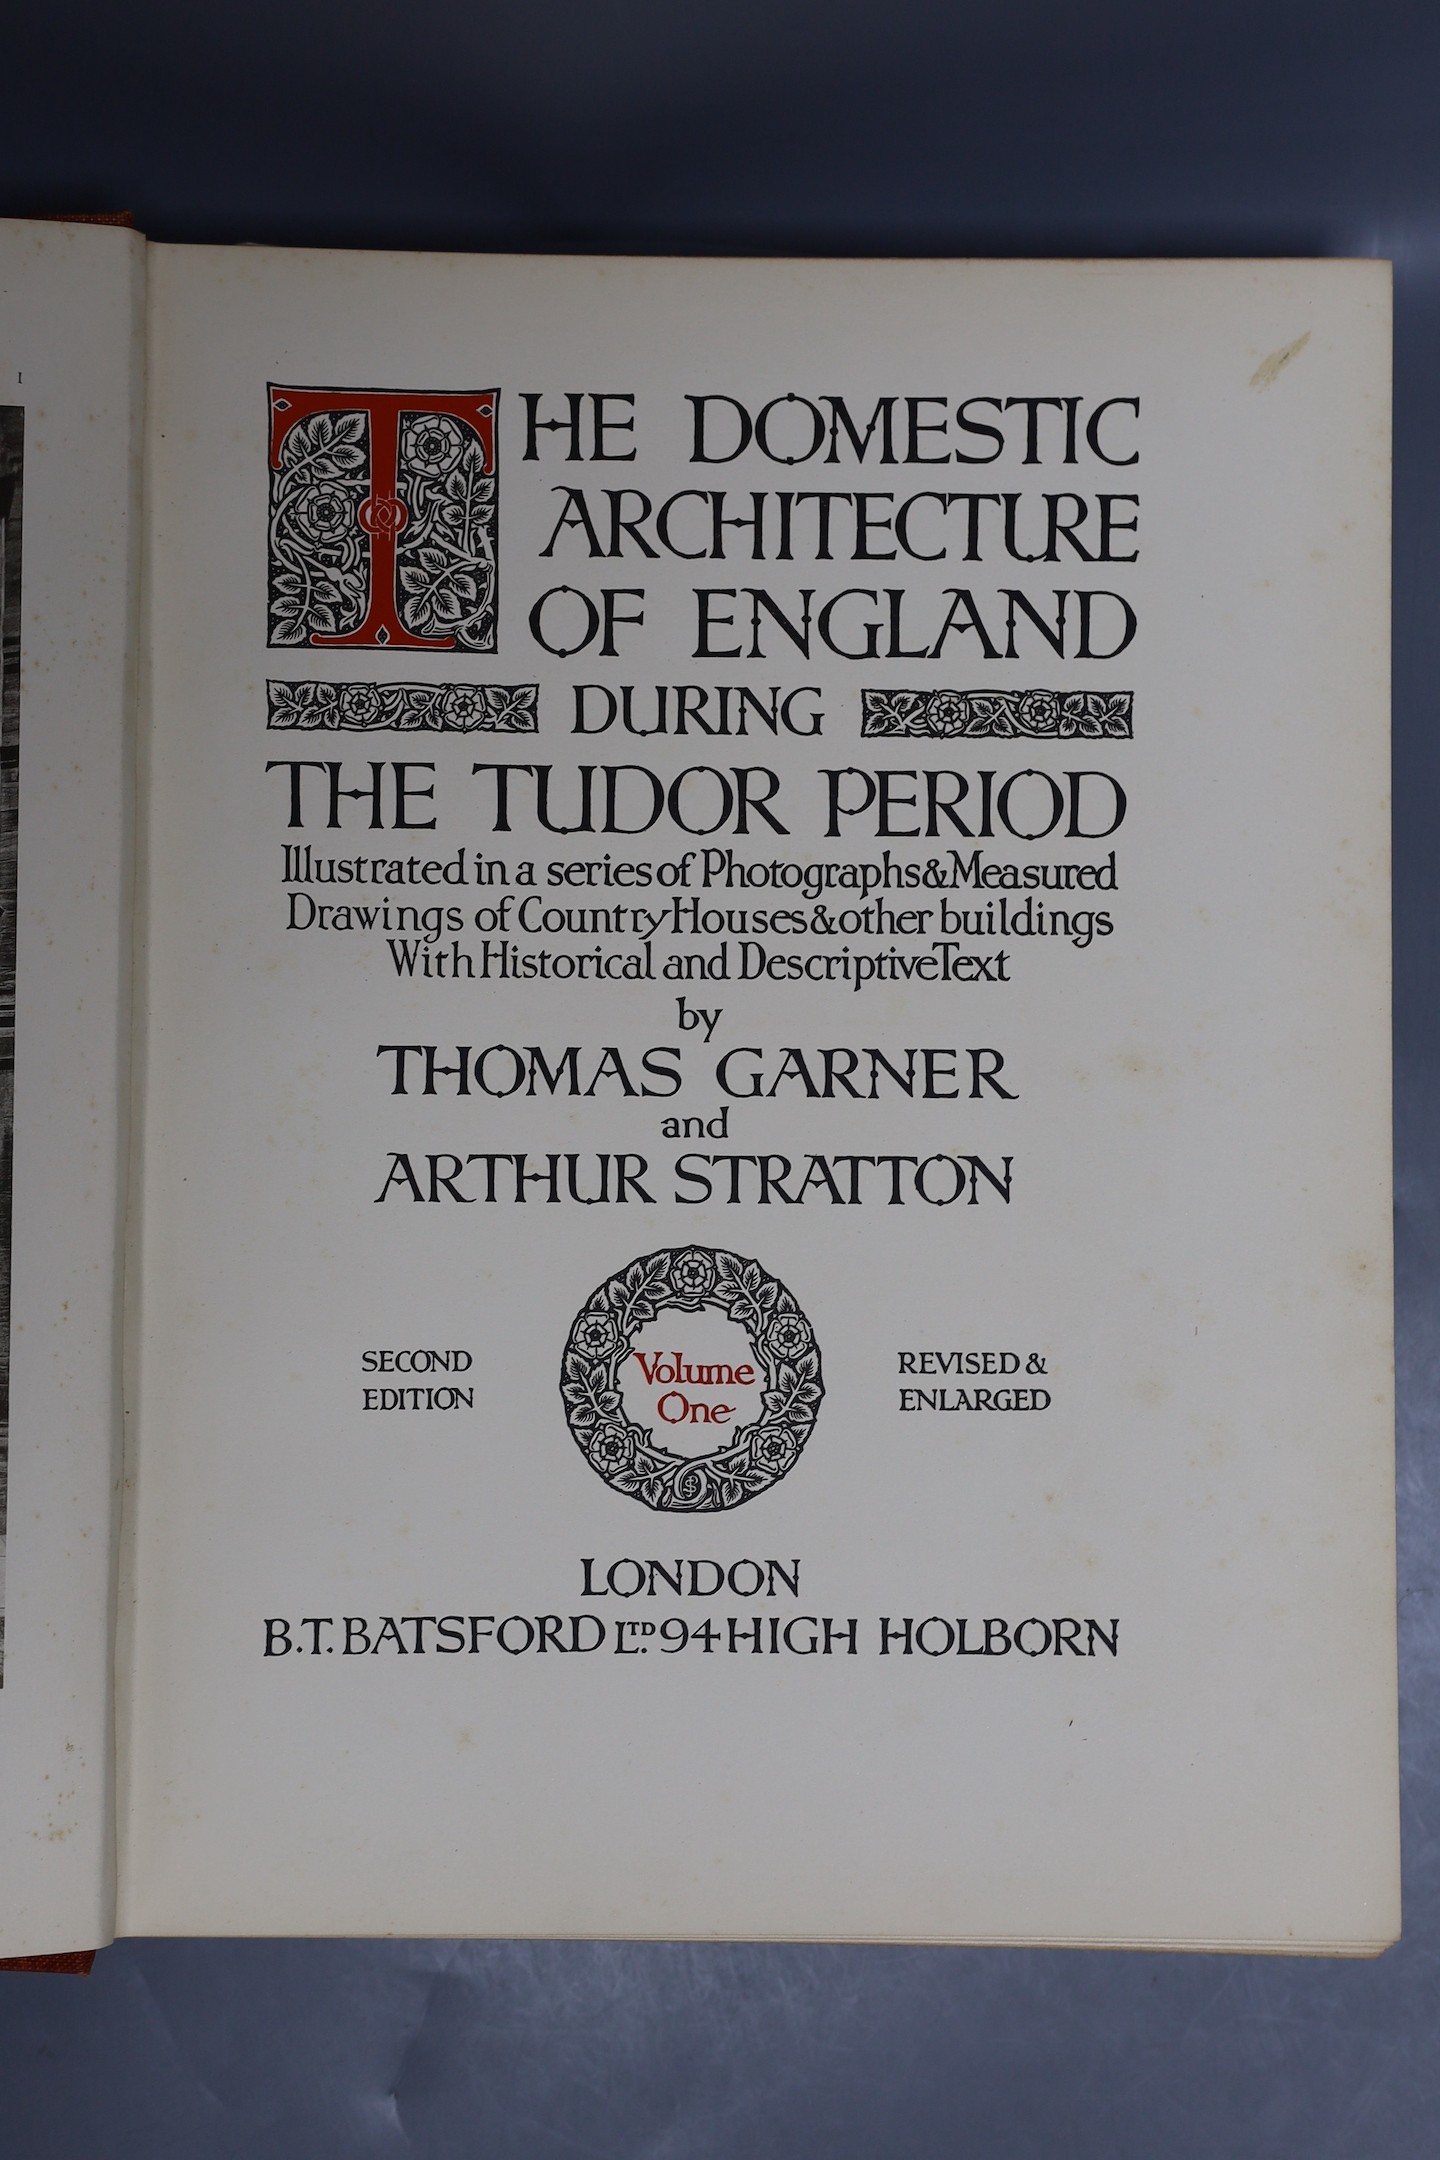 Garner, Thomas and Stratton, Arthur - The Domestic Architecture of England During the Tudor Period, 2nd edition, 2 vols, folio, red cloth gilt, B.T. Batsford Ltd., London, 1929